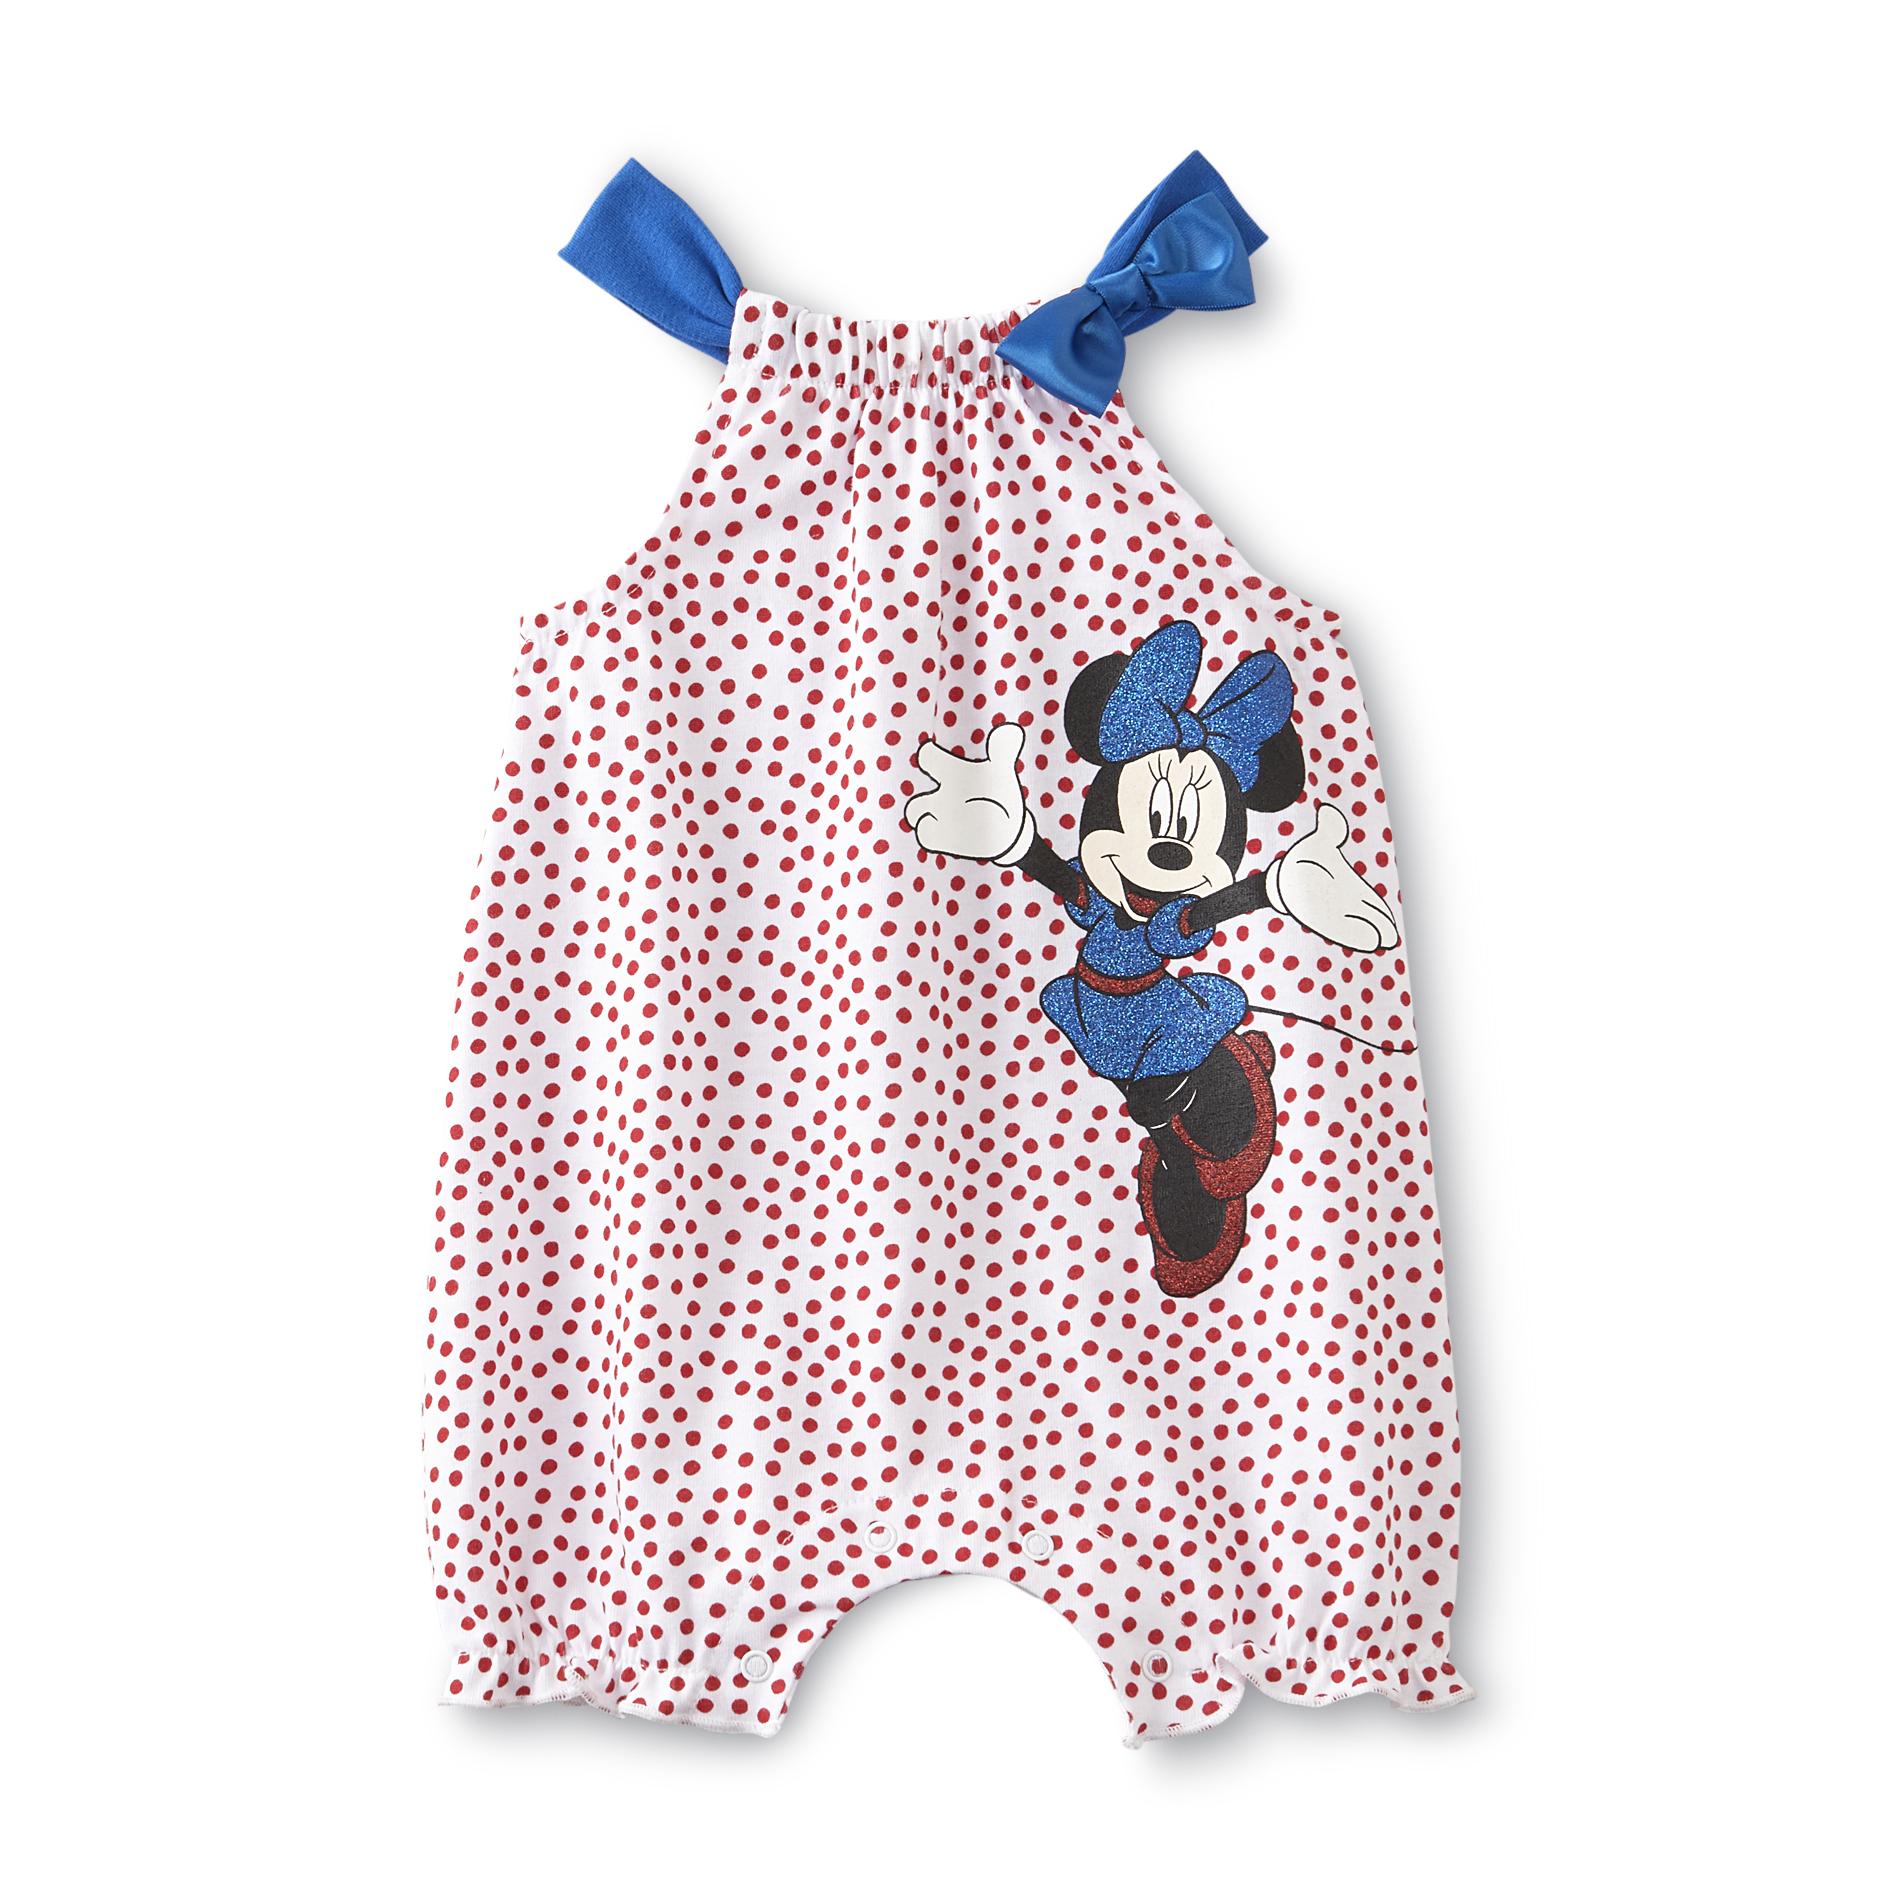 Disney Minnie Mouse Newborn & Infant Girl's Romper - Polka Dot